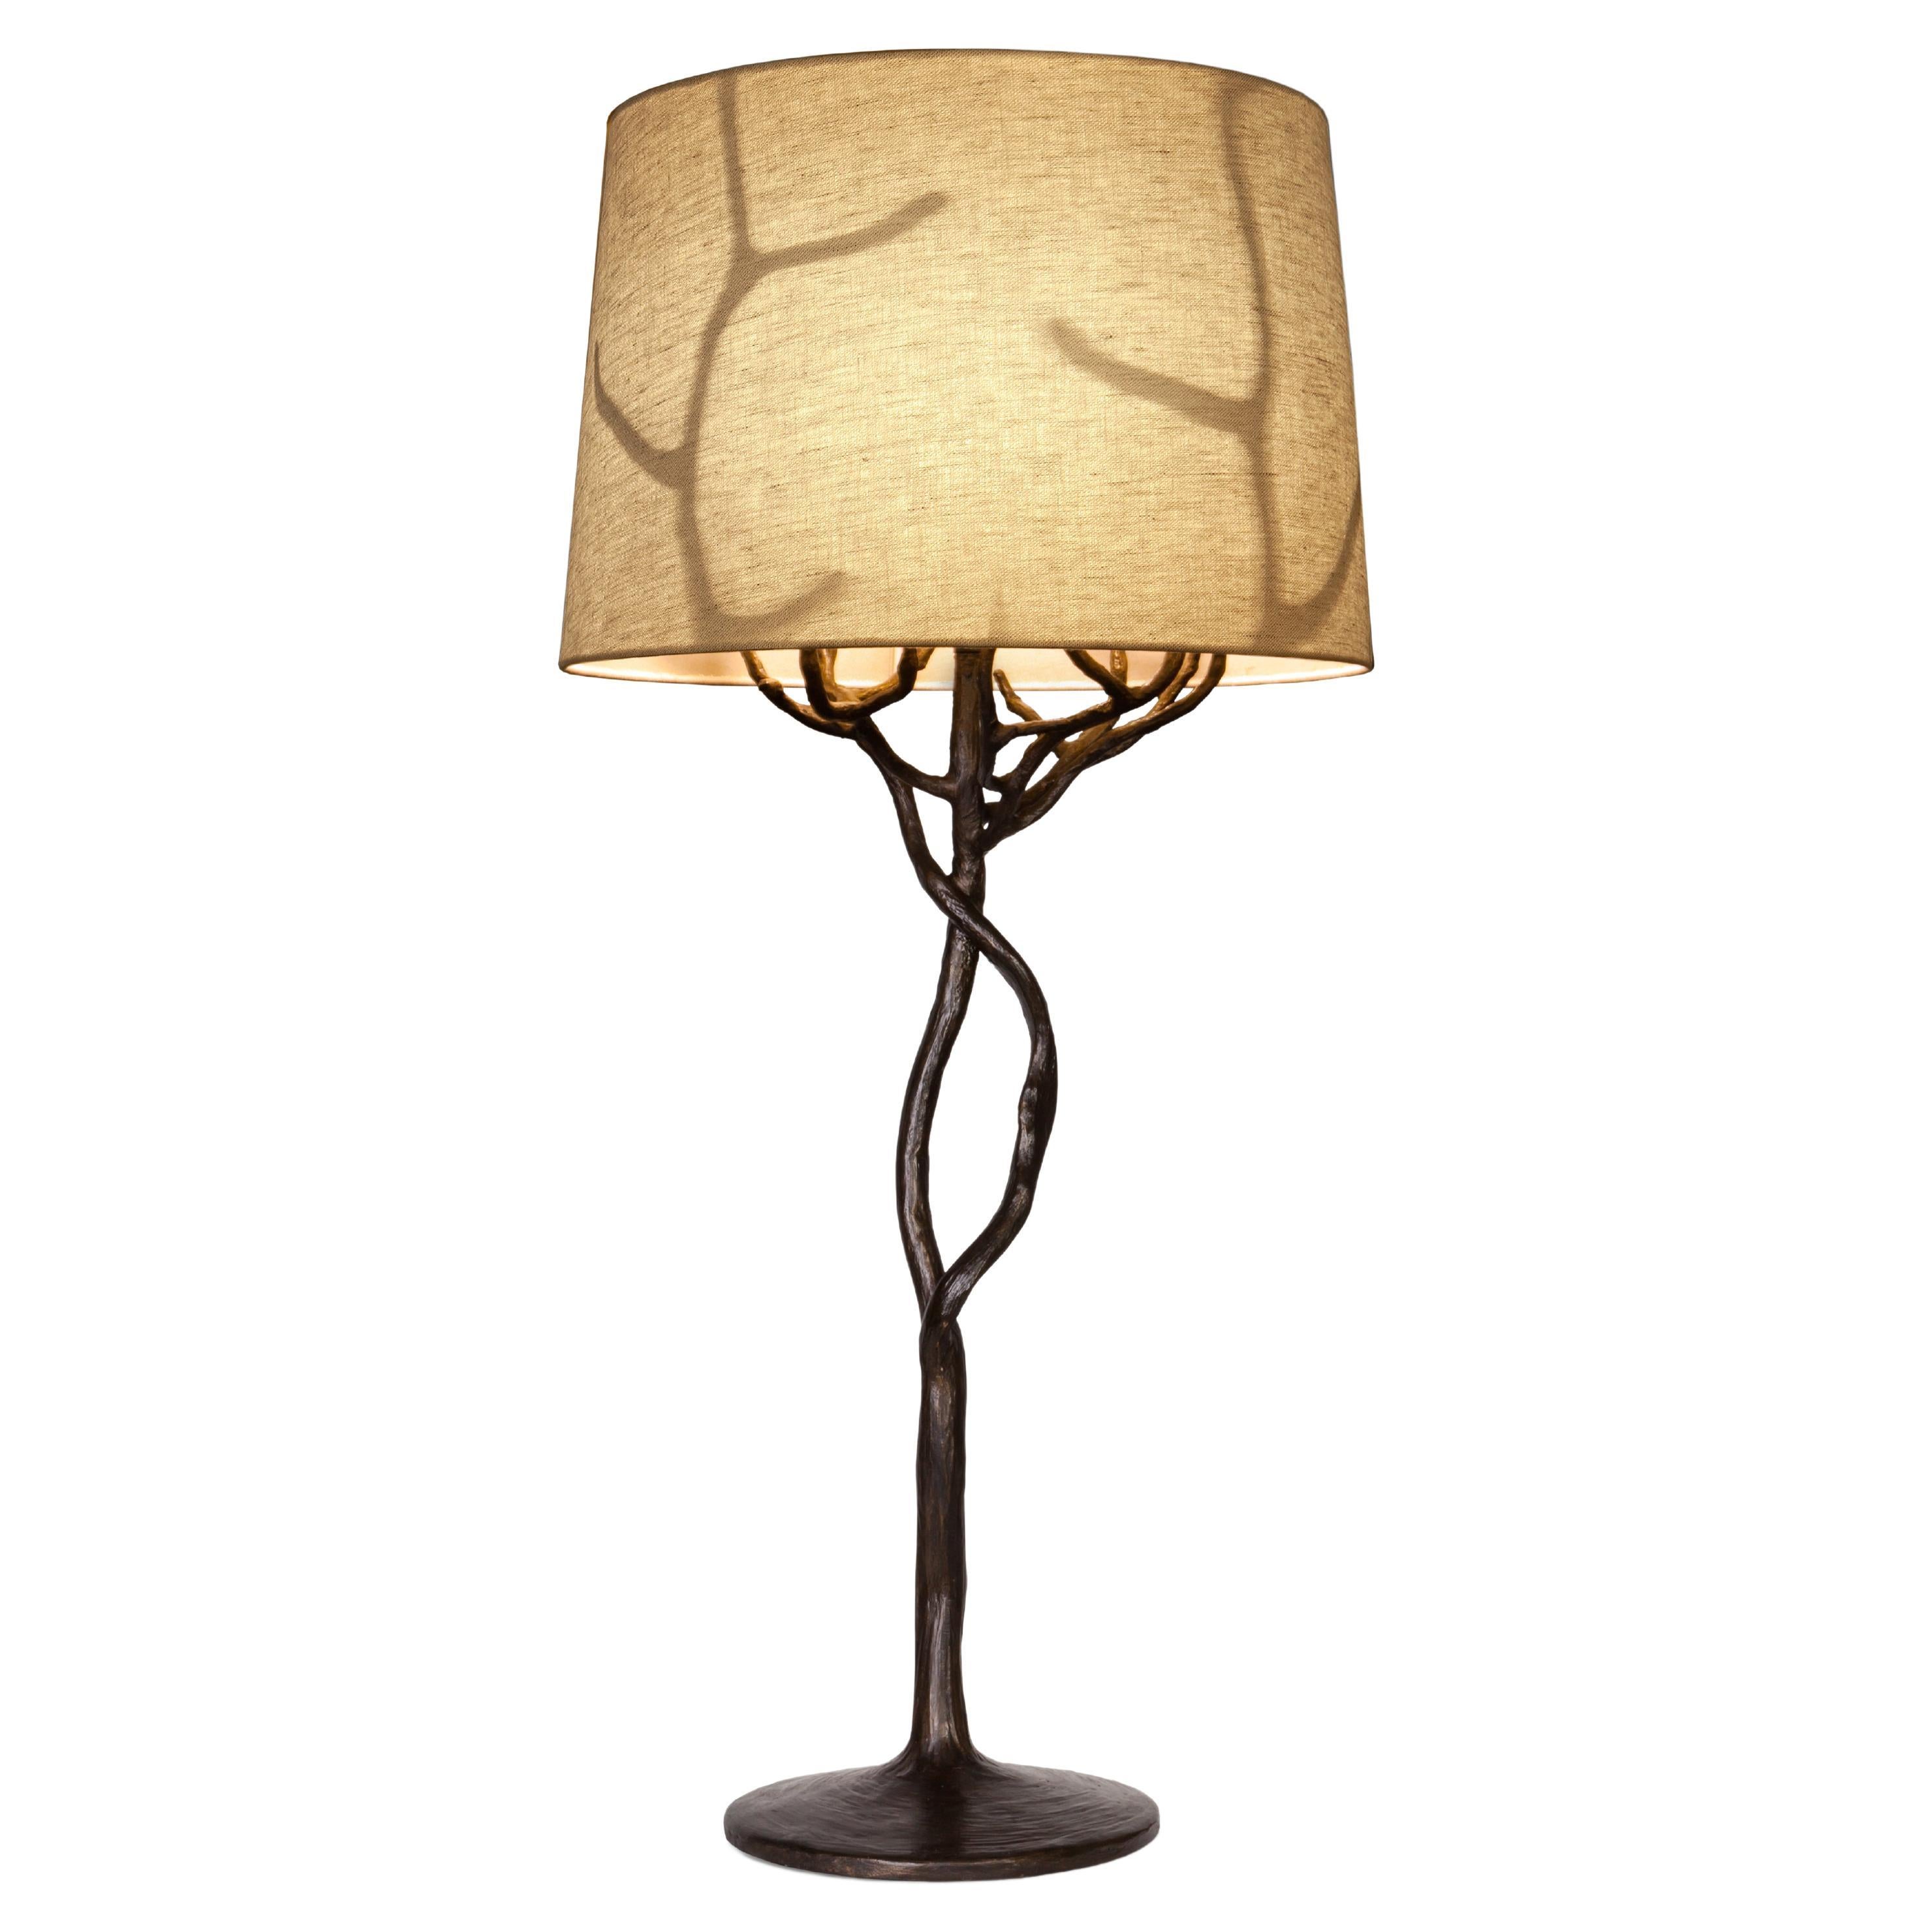 Organic Table Lamp “Etna” in Forest Brown Finish, Benediko